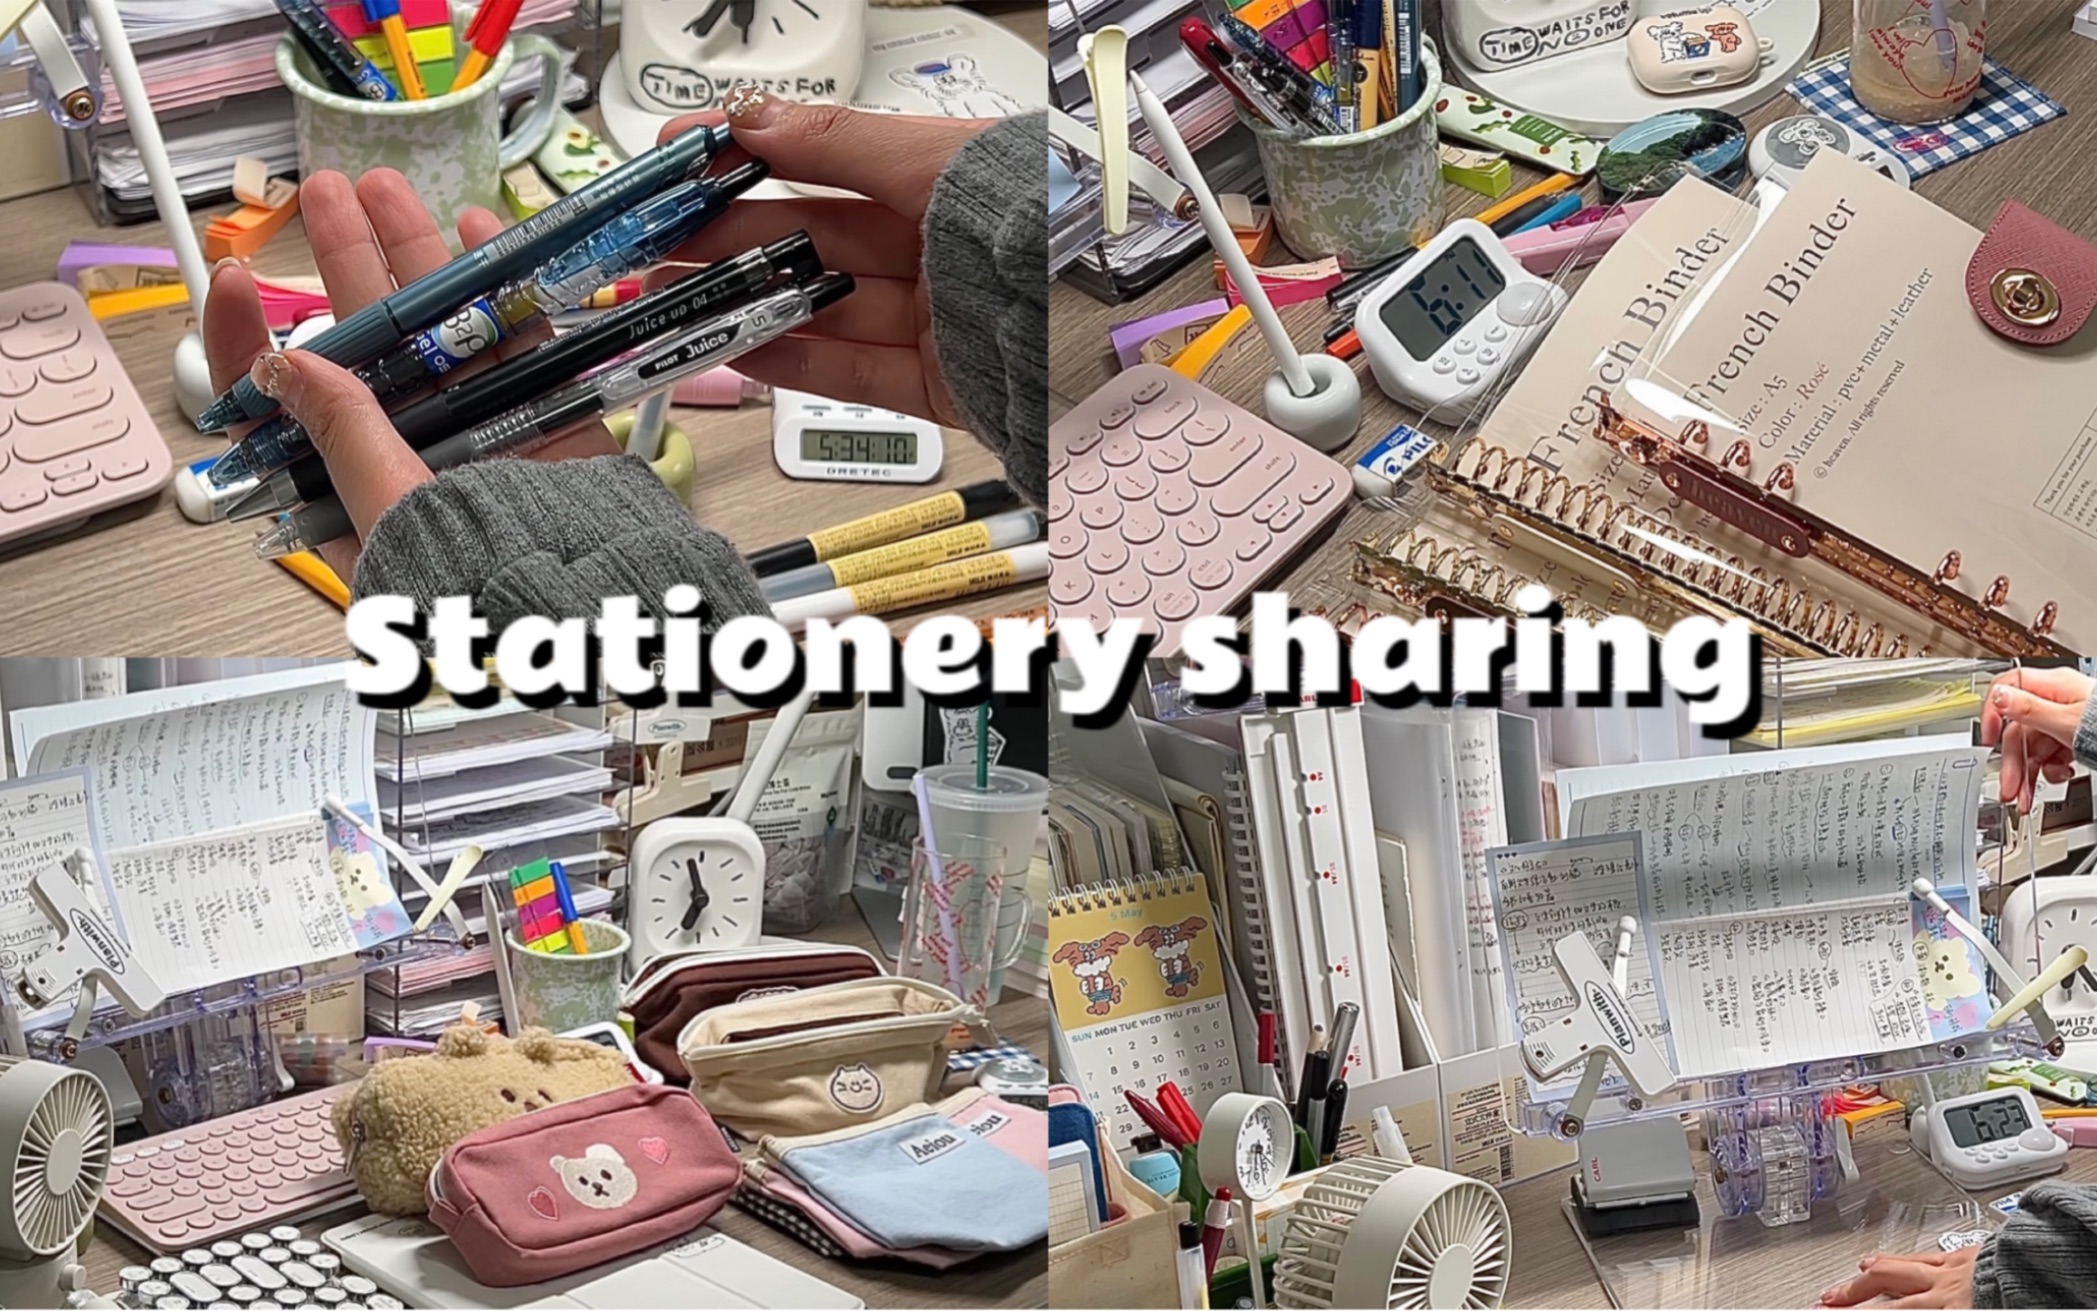 Stationery sharing | 实用文具分享 | 按盒囤的刷题笔 | 提升学习效率好物 | 好看的文具是我学习的动力 | heaven活页夹